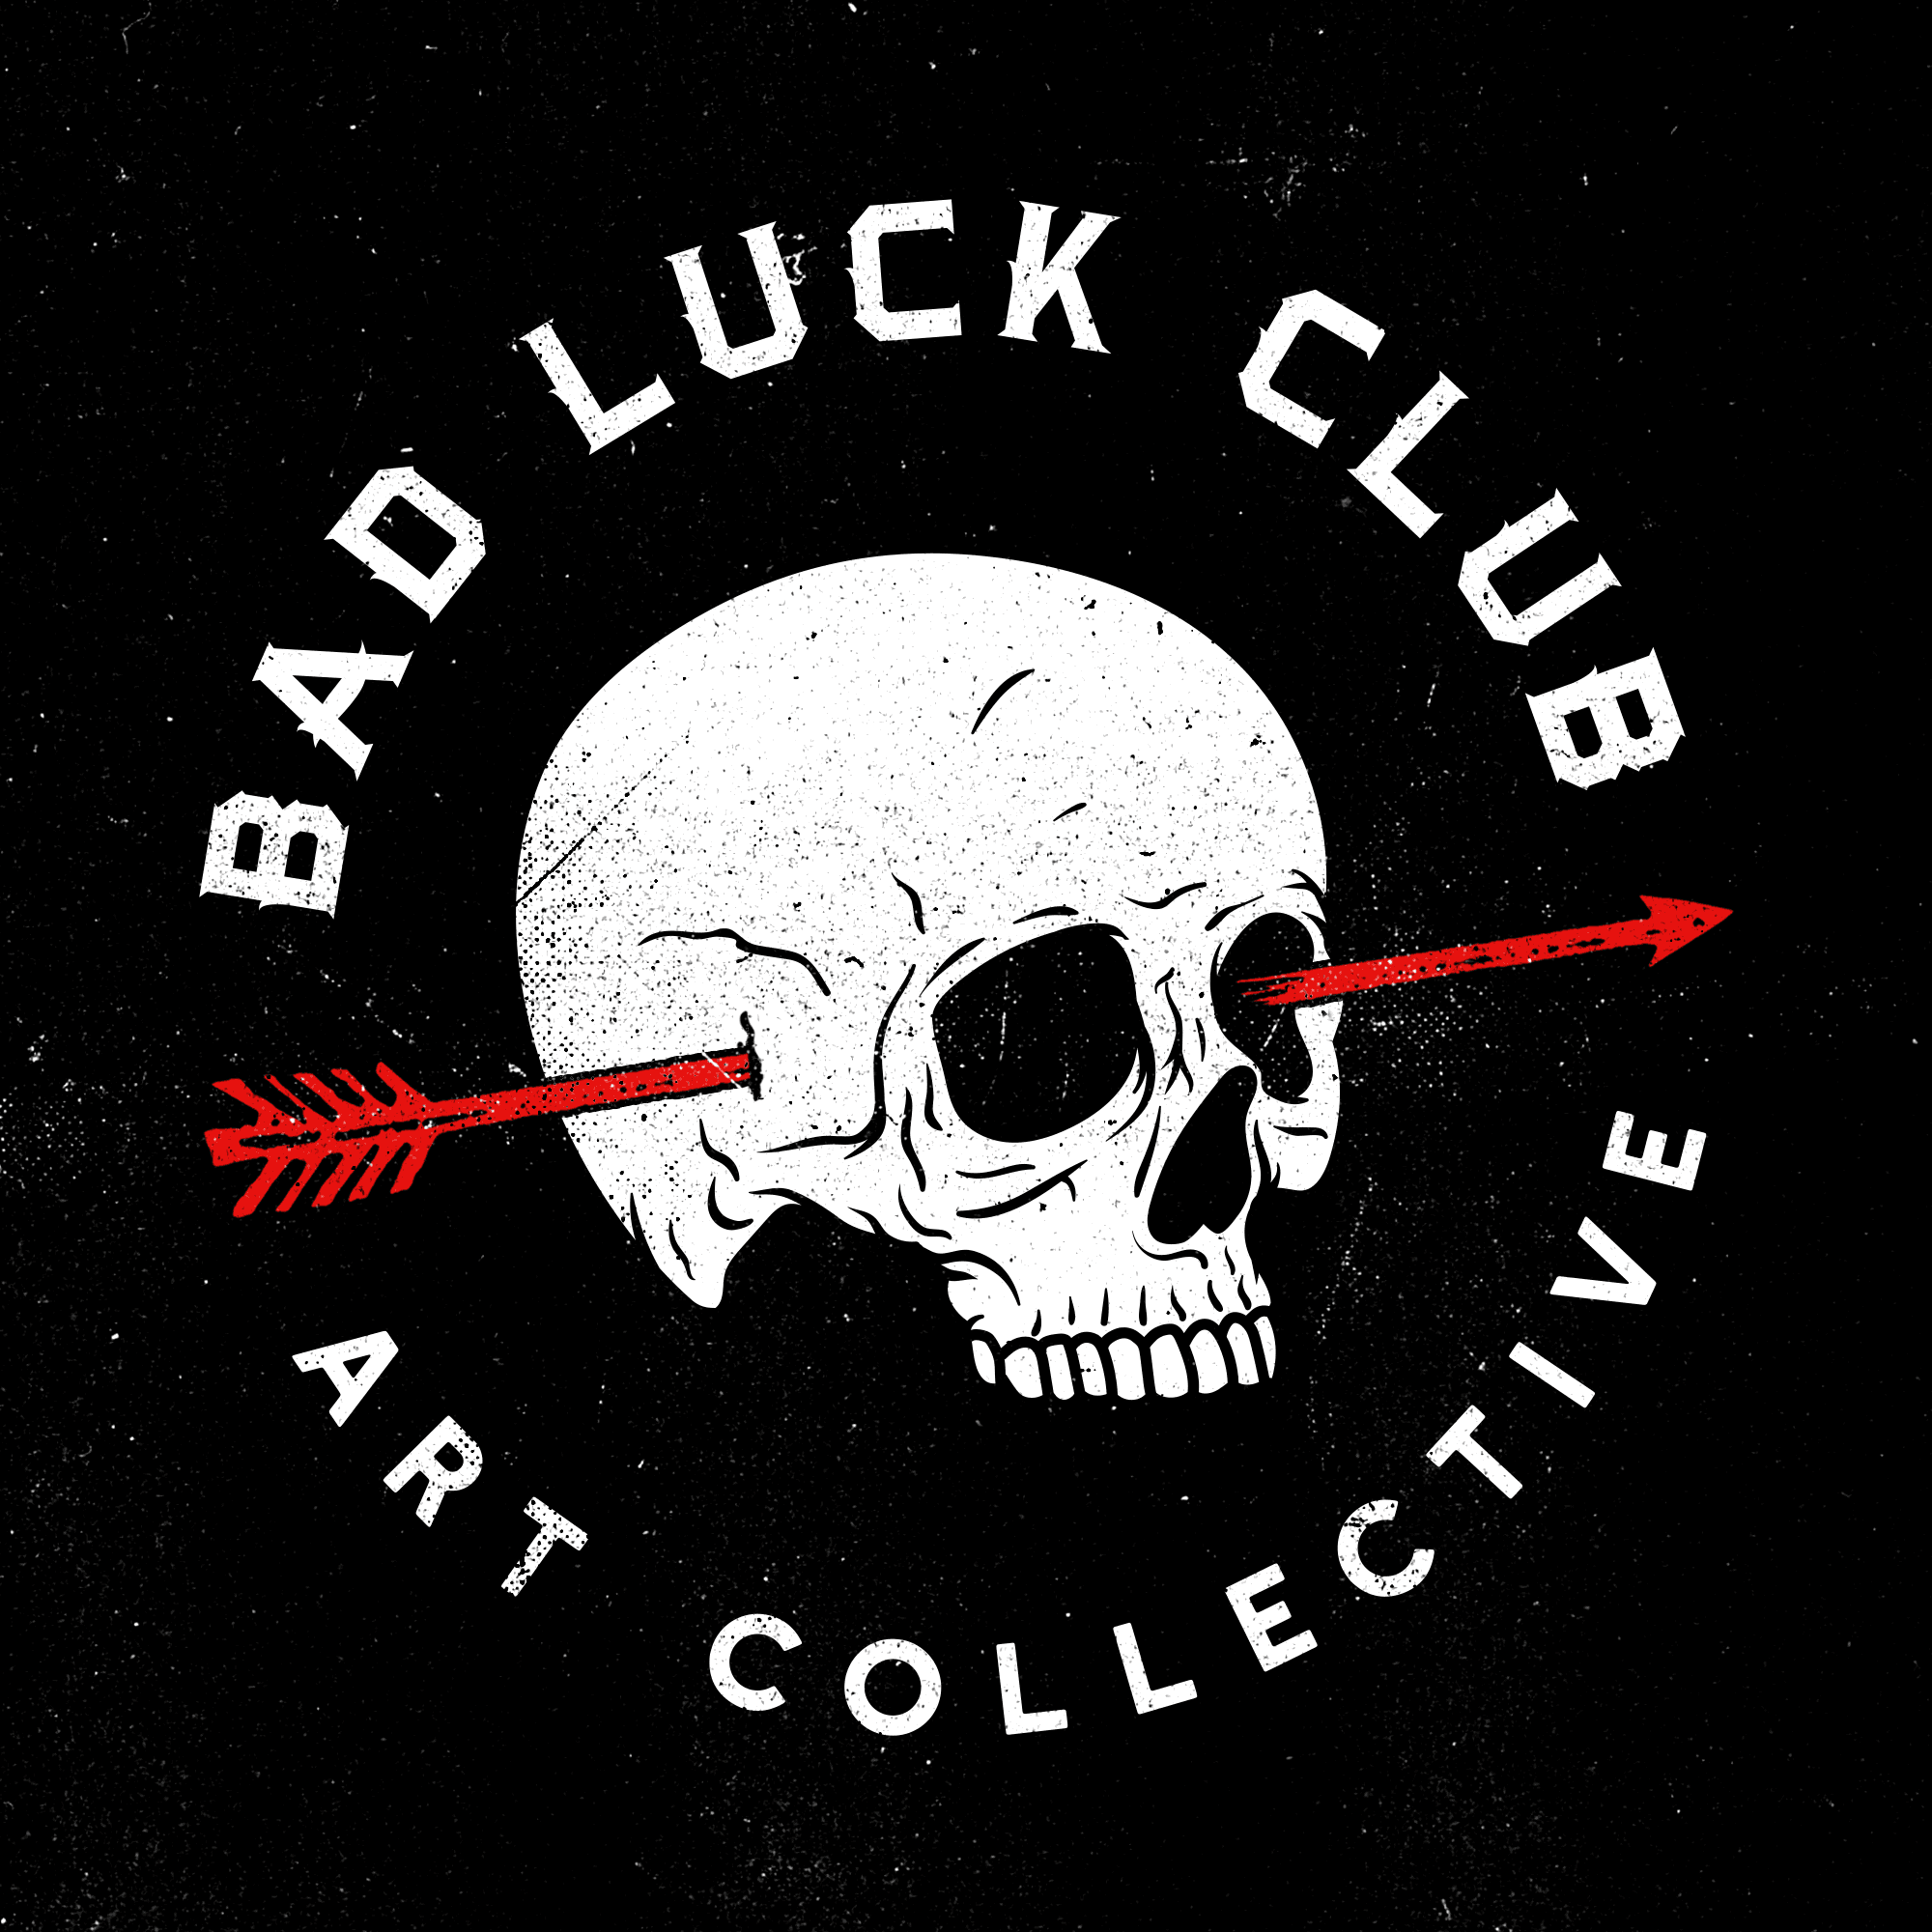 BadLuckClubCollective